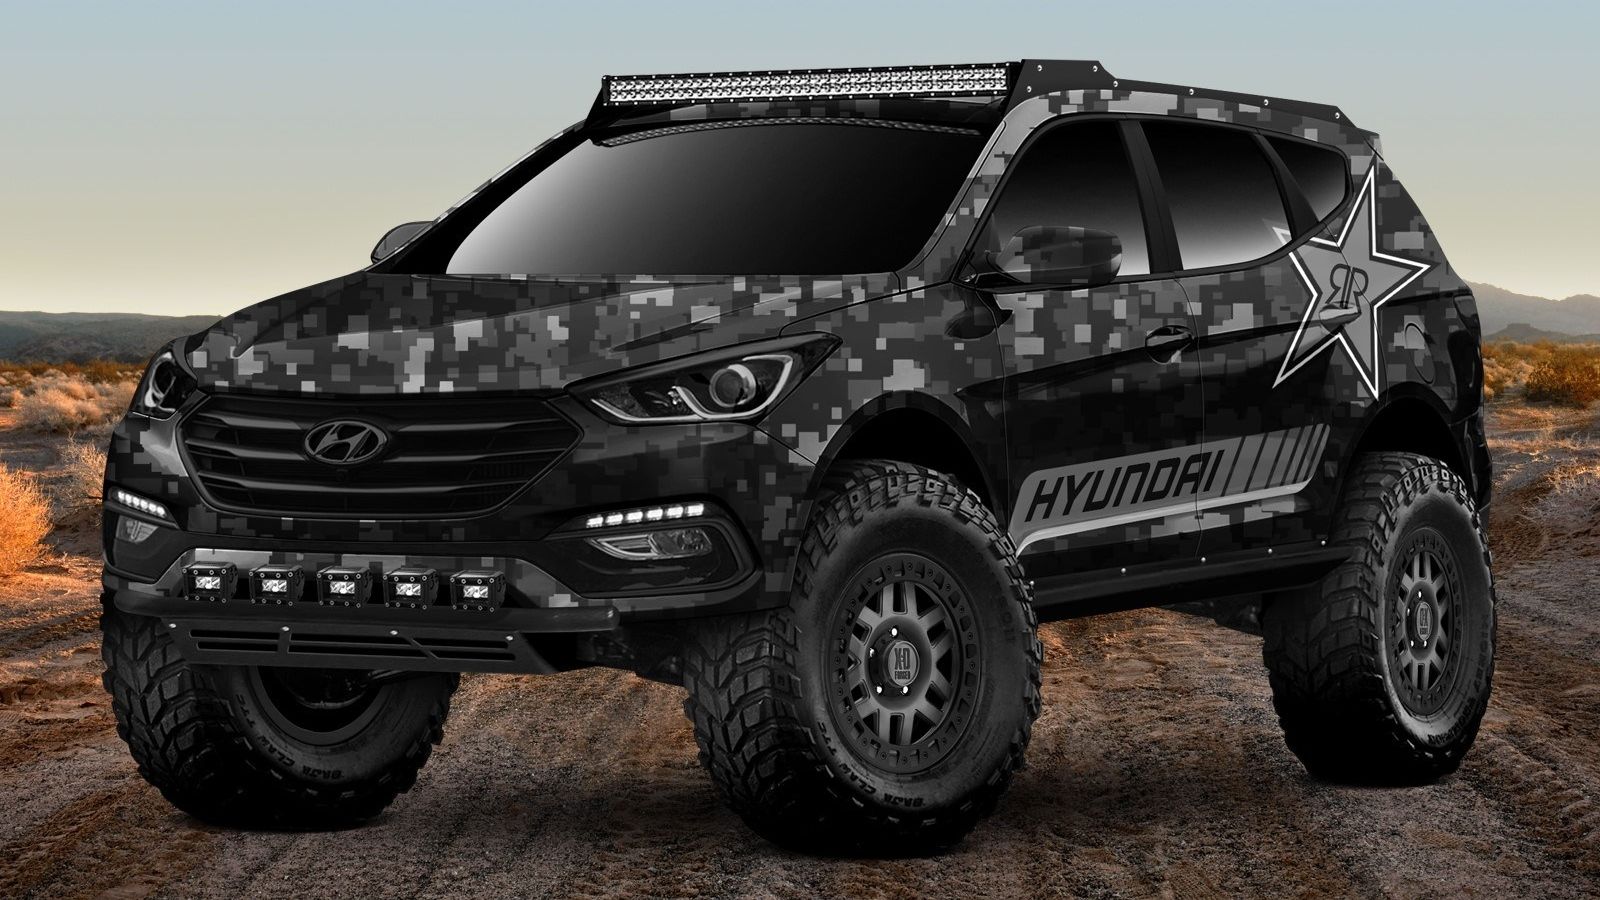 2017 Hyundai Rockstar Energy Moab Extreme Off-Roader Santa Fe Sport Concept